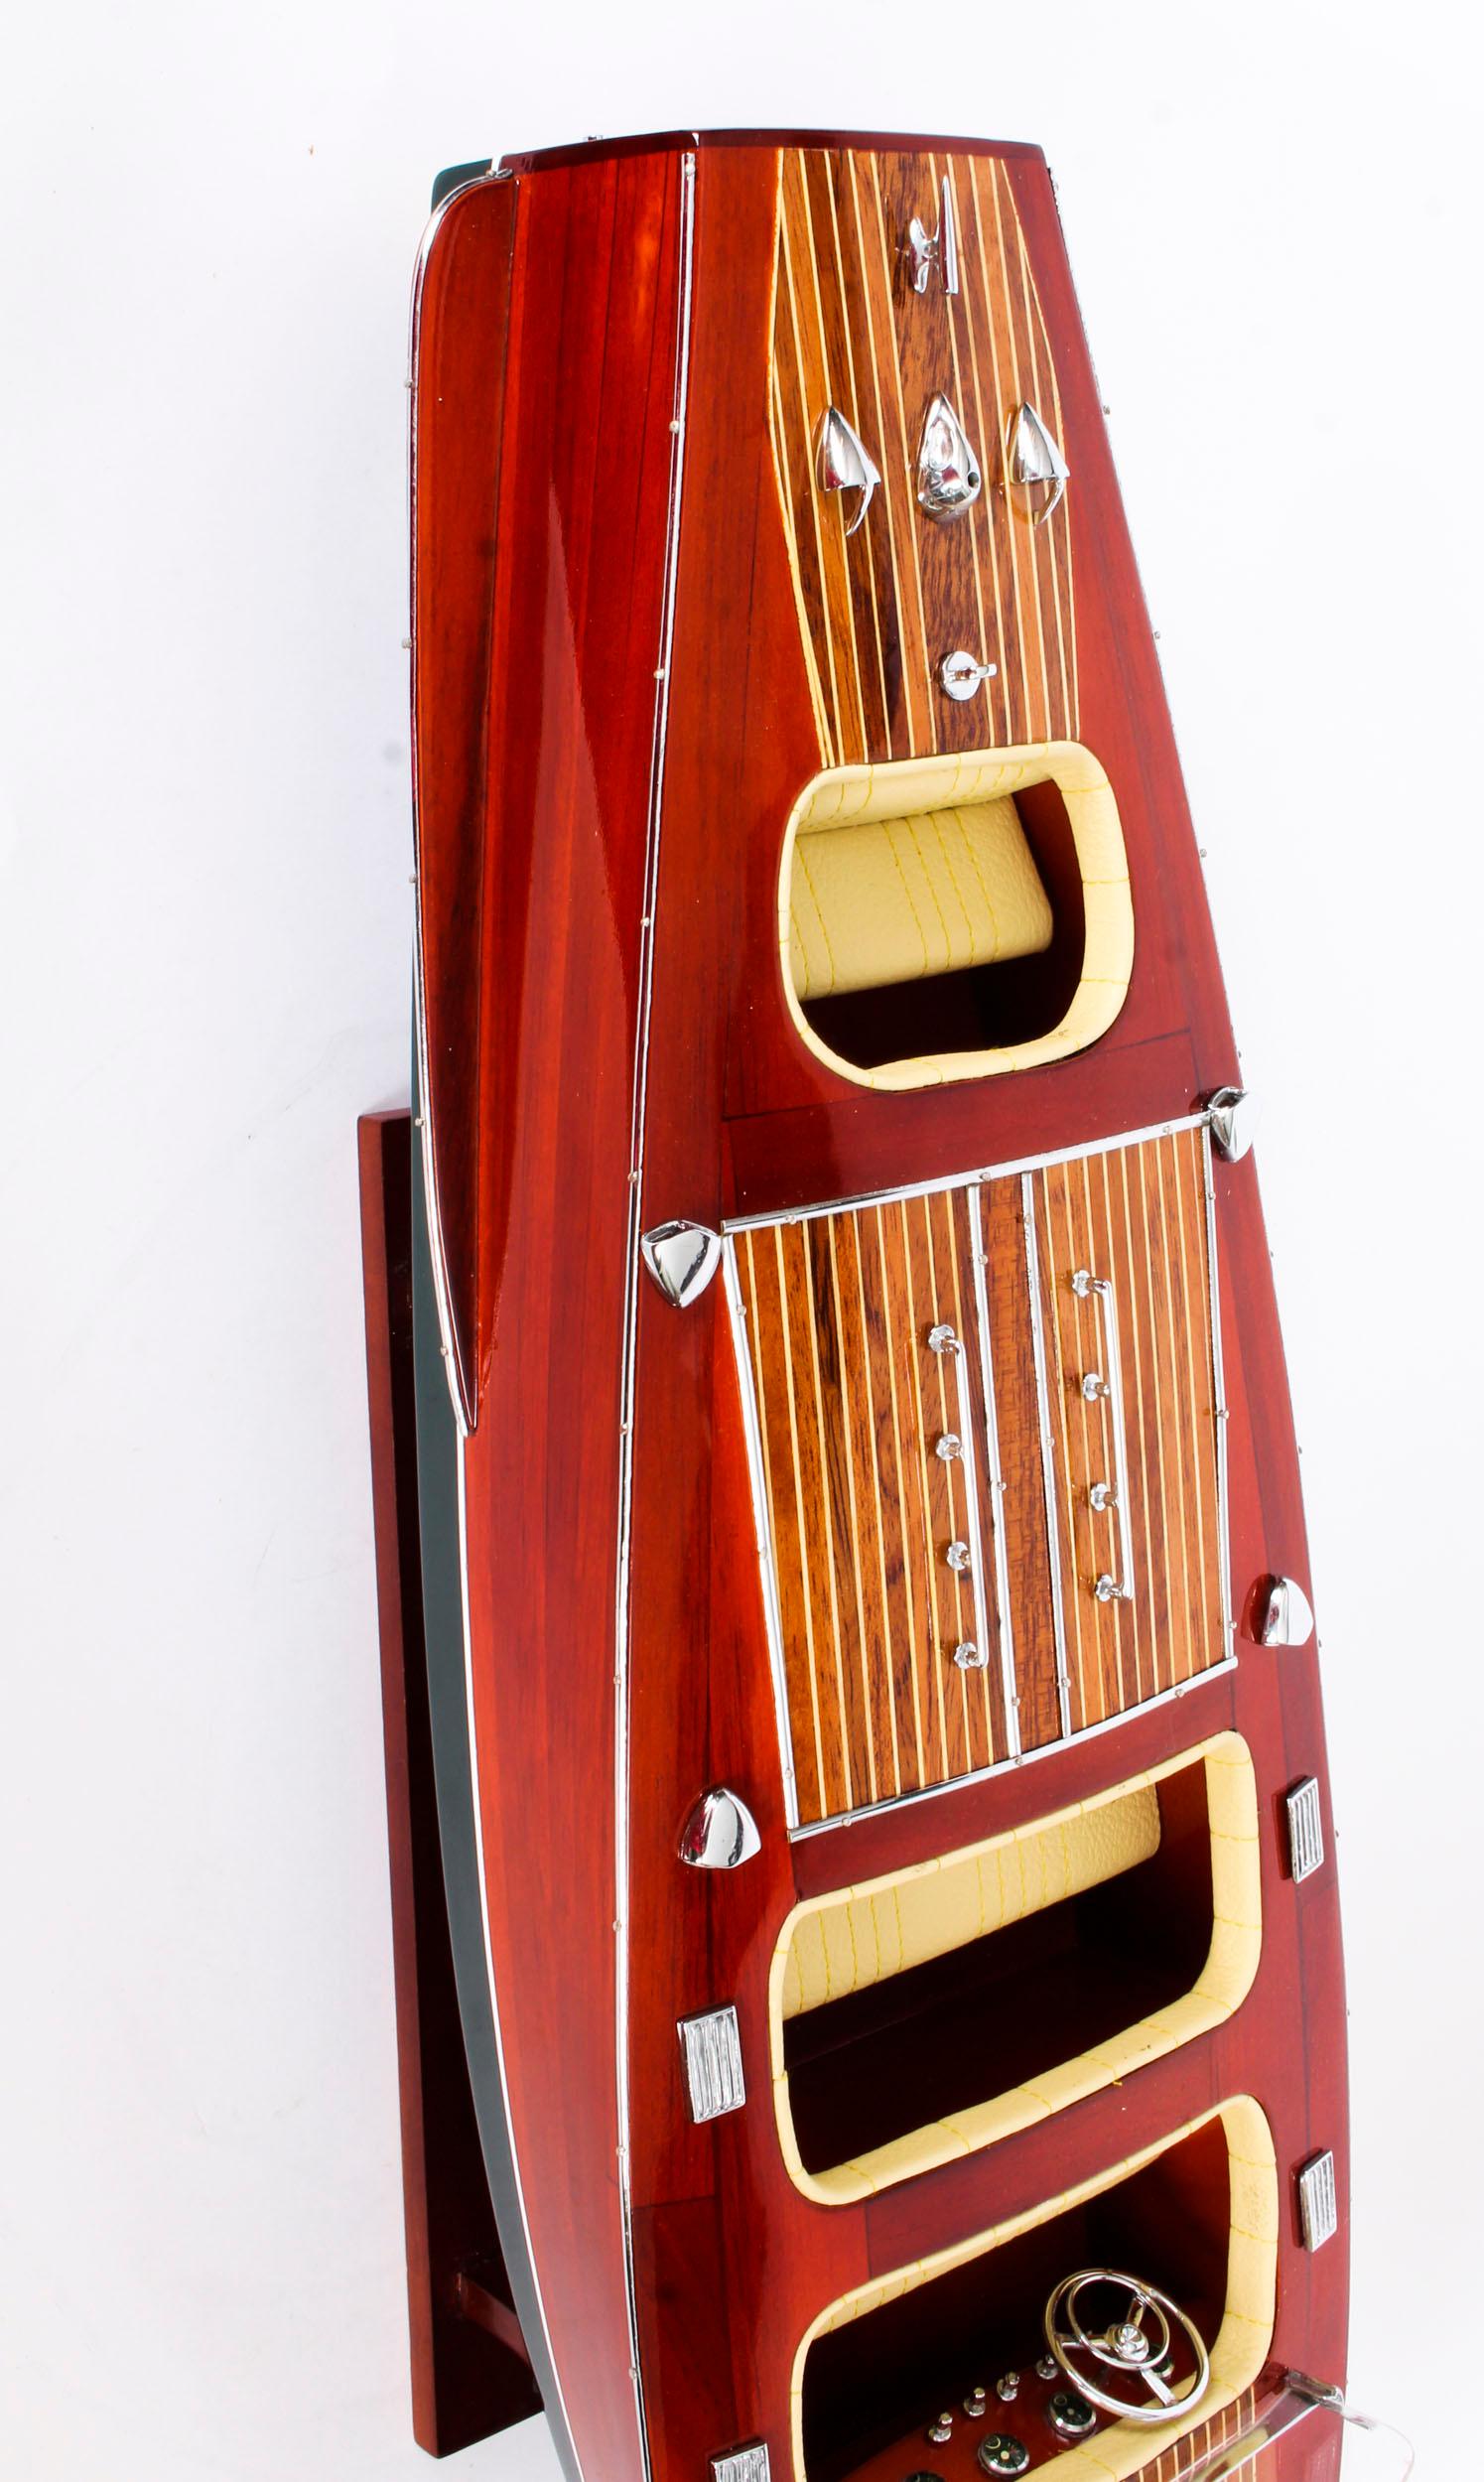 Leather Vintage Model of a Riva Rivarama Speedboat with Cream Interior, 20th Century